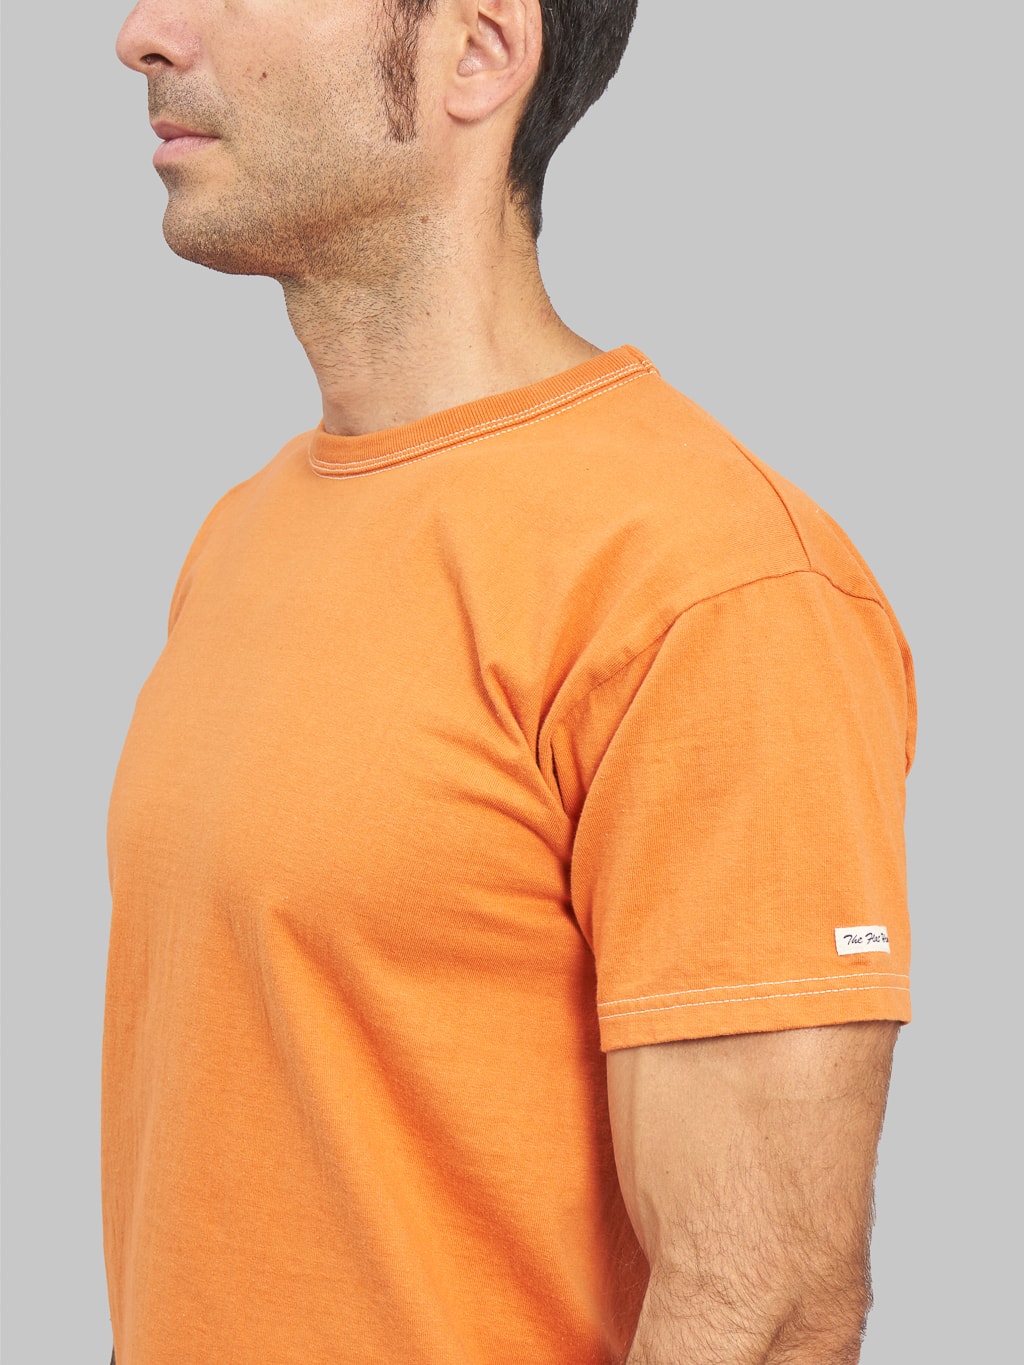 The Flat Head Loopwheeled Heavyweight Plain TShirt Dark Orange chest details